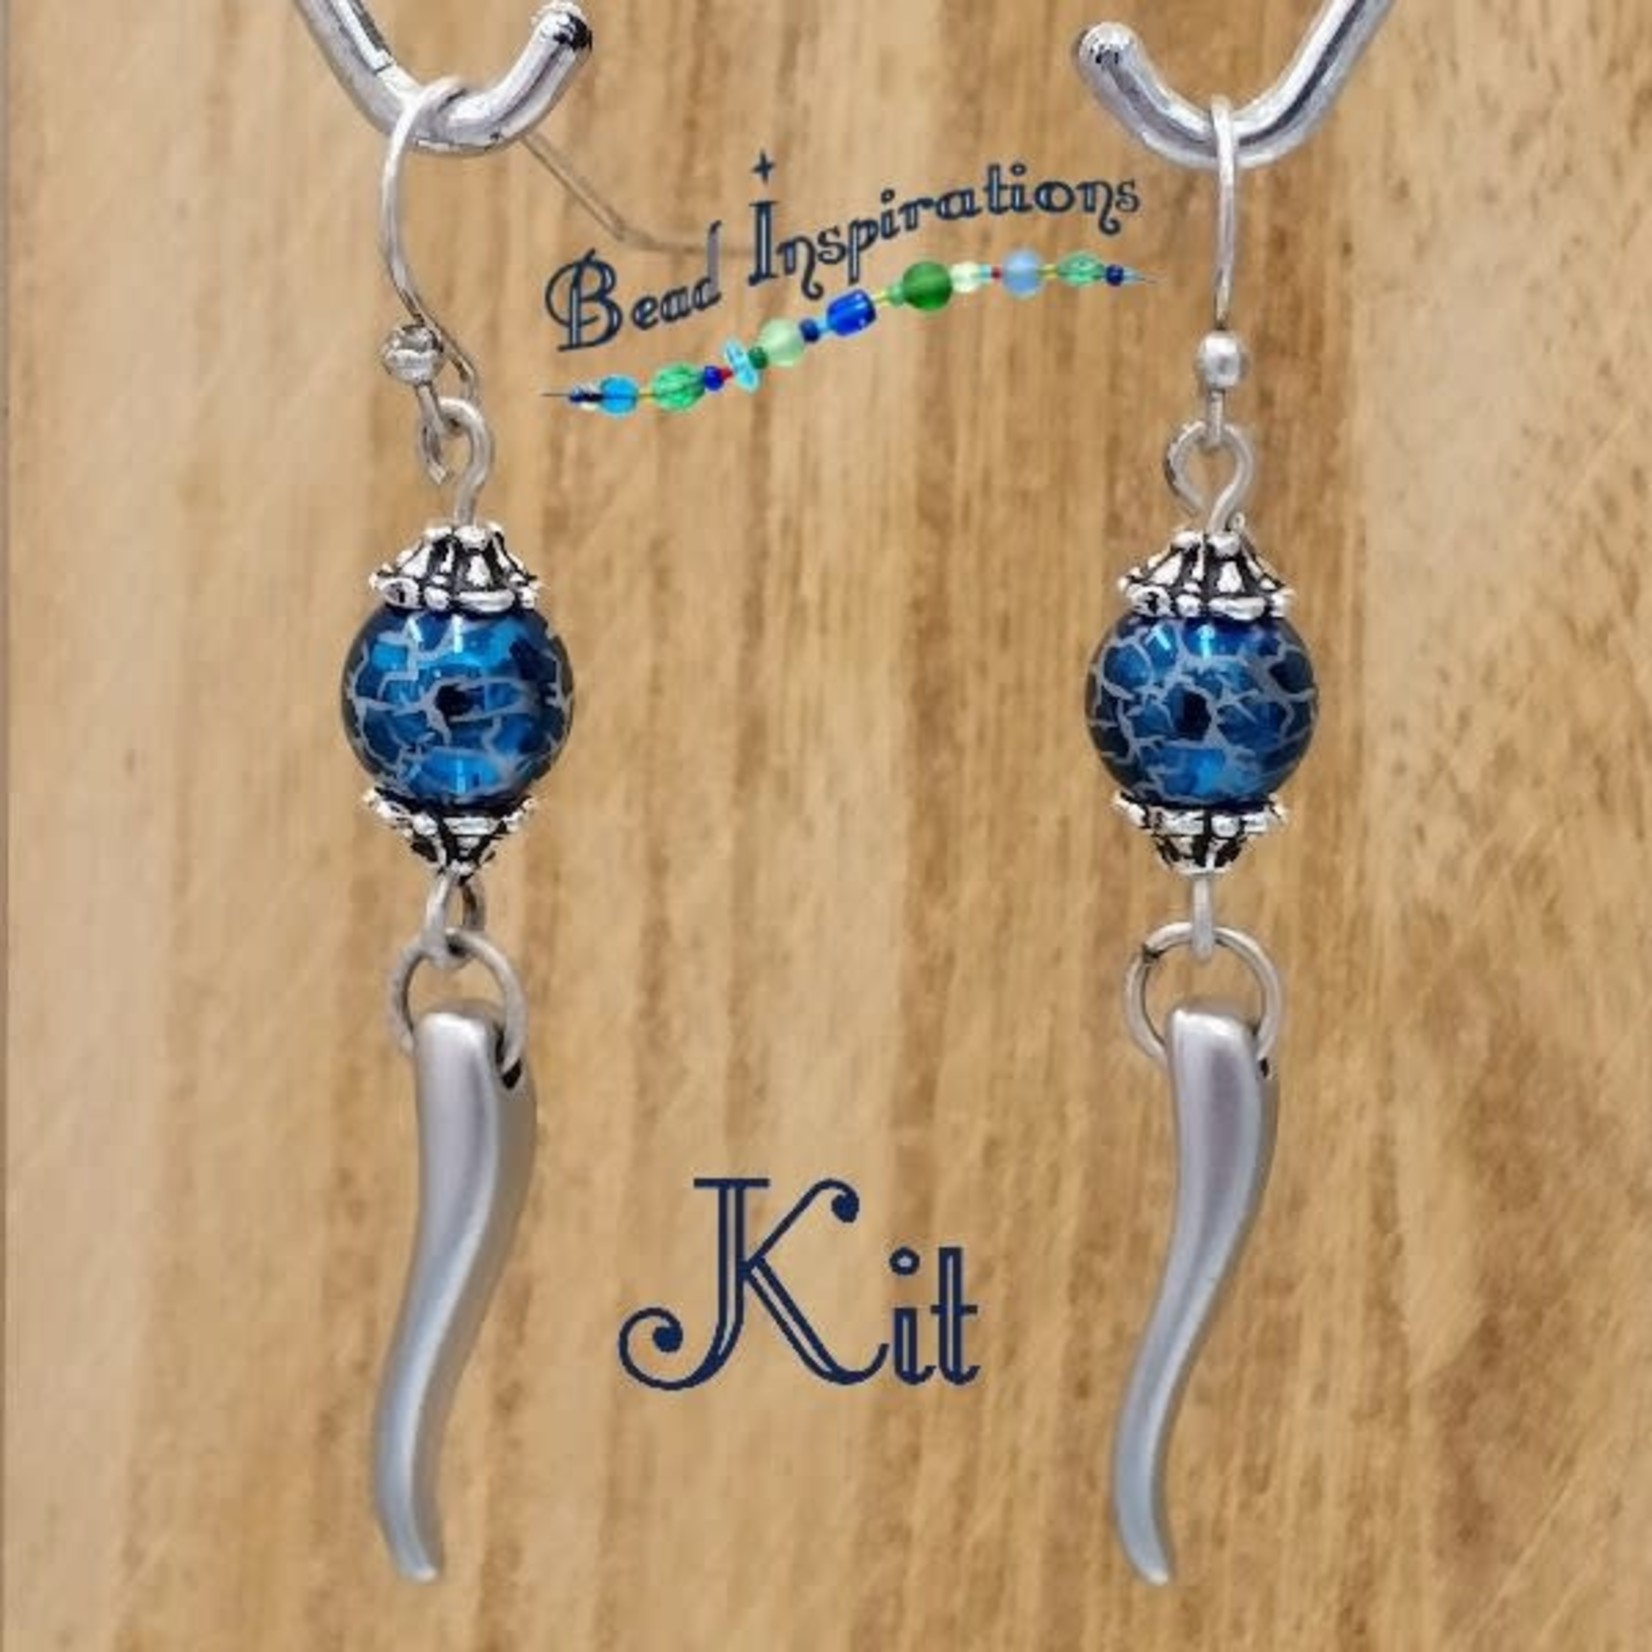 Bead Inspirations Blue Ice Earring Kit